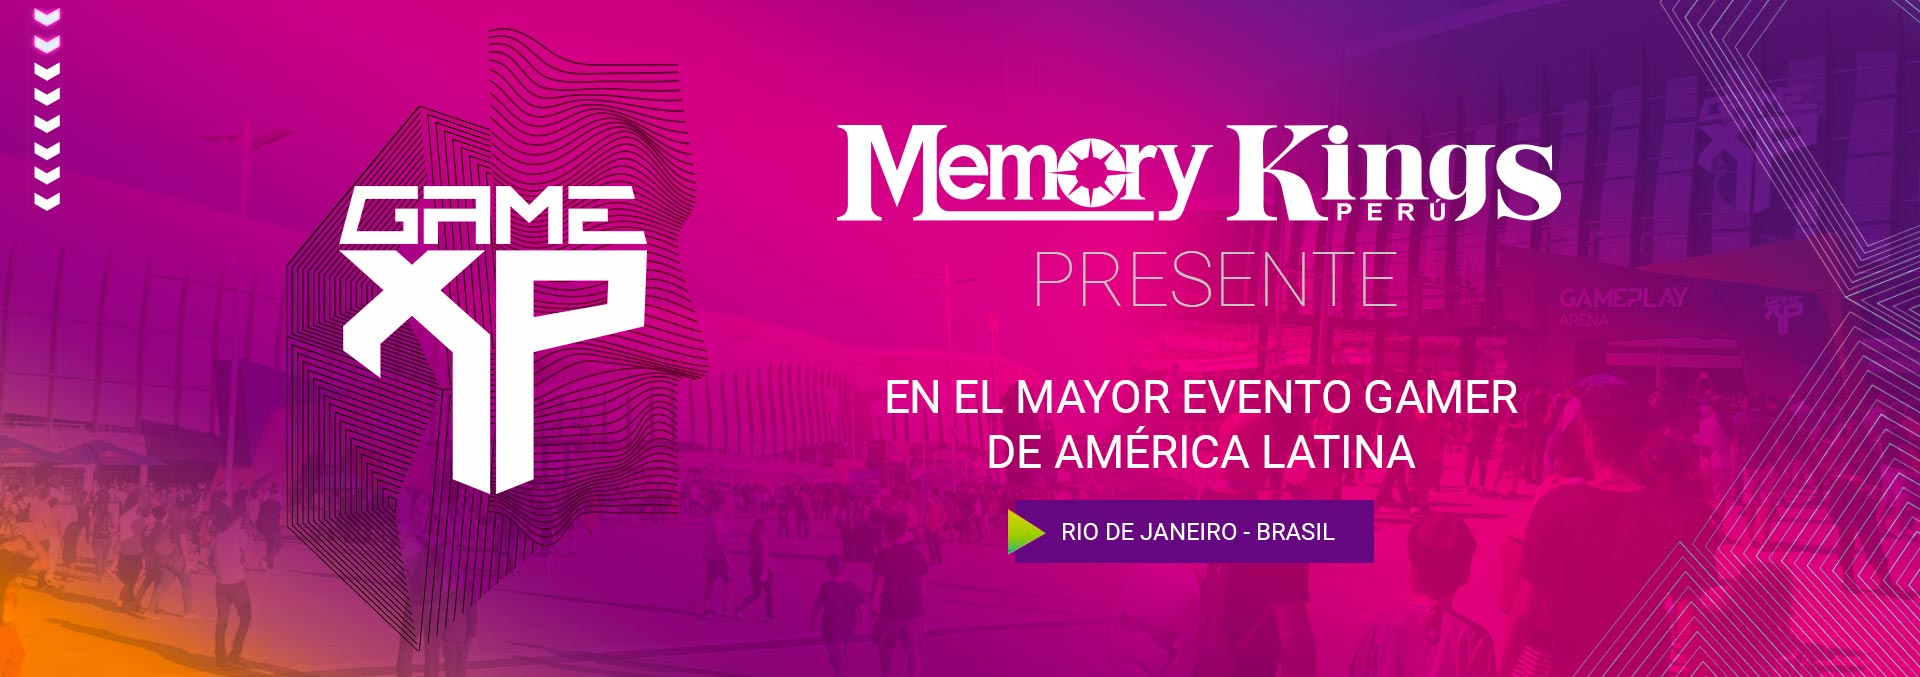 PRIMER ESPECIAL - MEMORY KINGS EN EL EVENTO GAMER MAS GRANDE DEL MUNDO GAME XP - RIO DE JANEIRO BRASIL